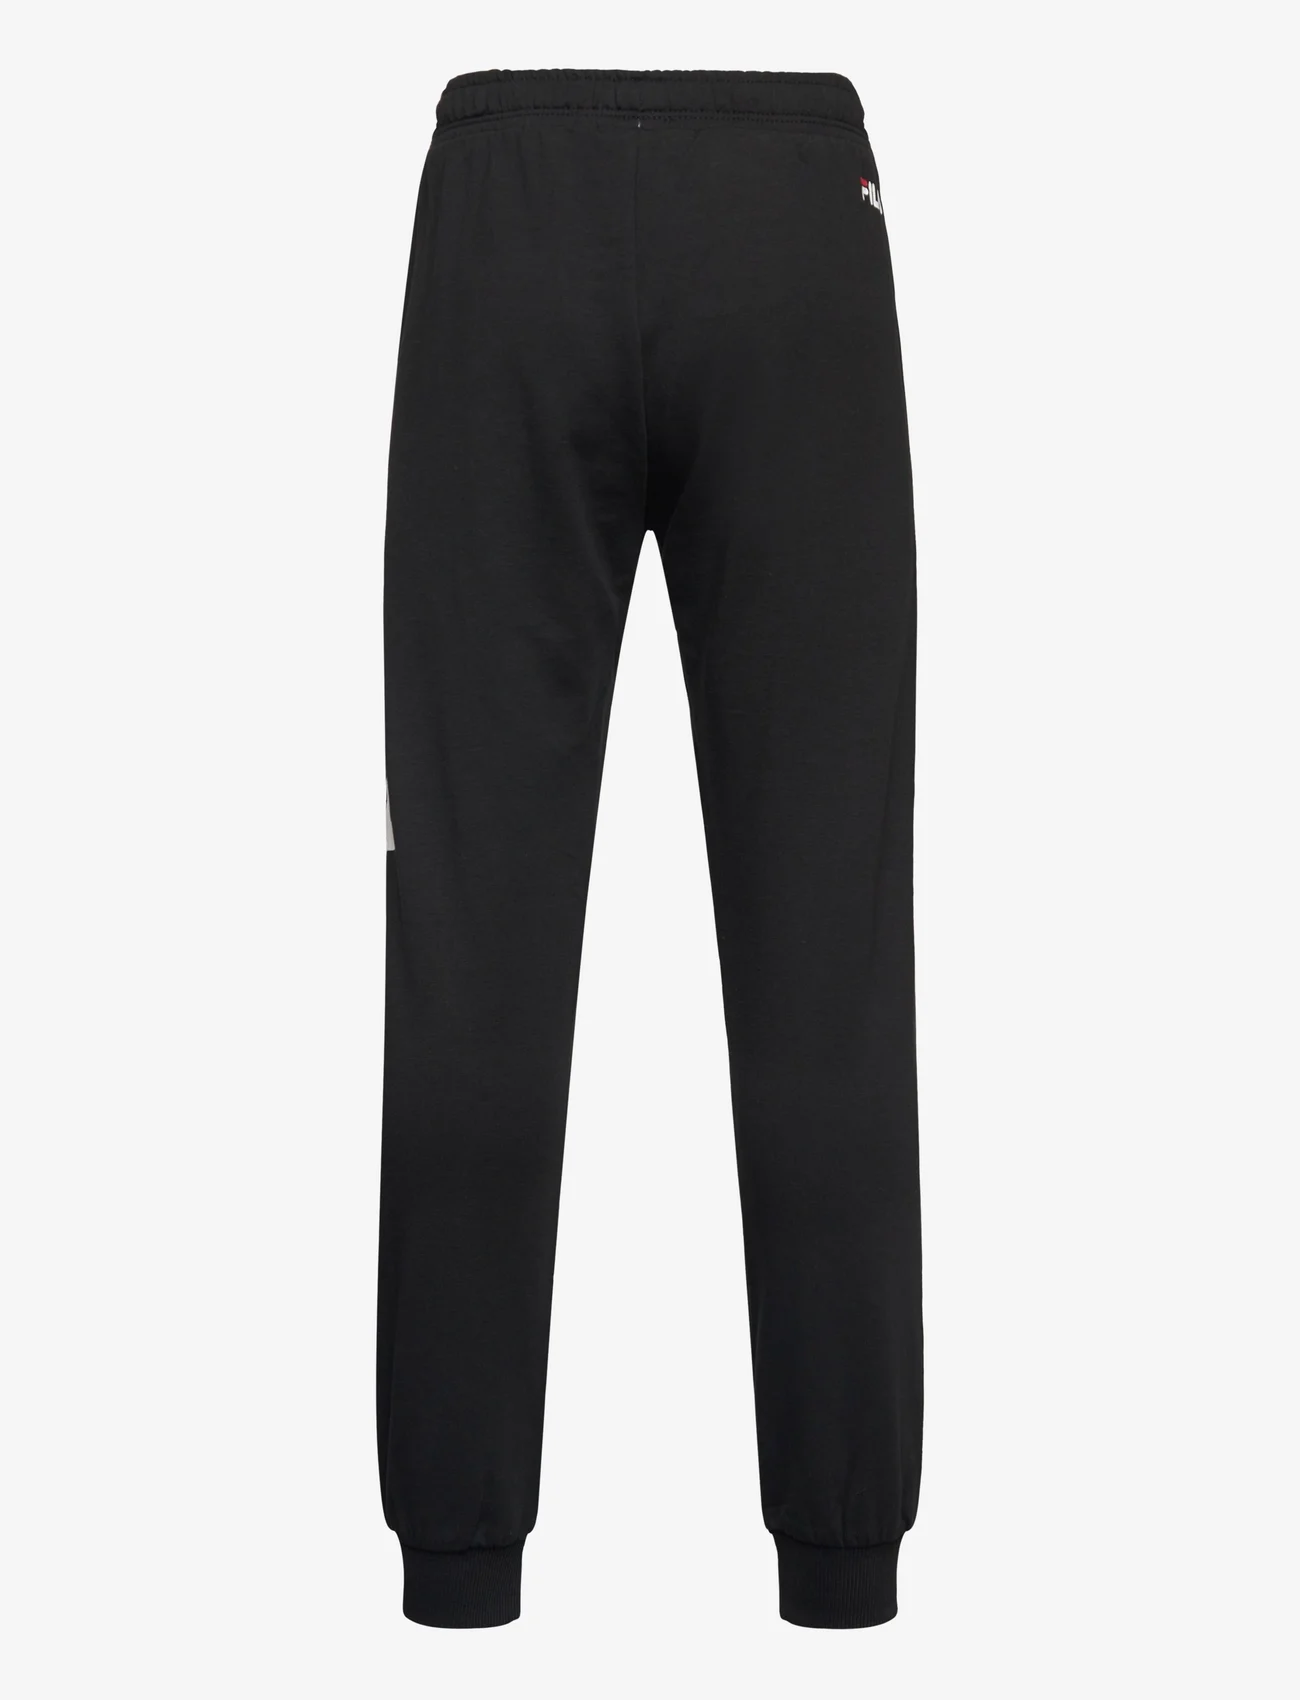 FILA - BALBOA classic logo sweat pants - sports bottoms - black - 1